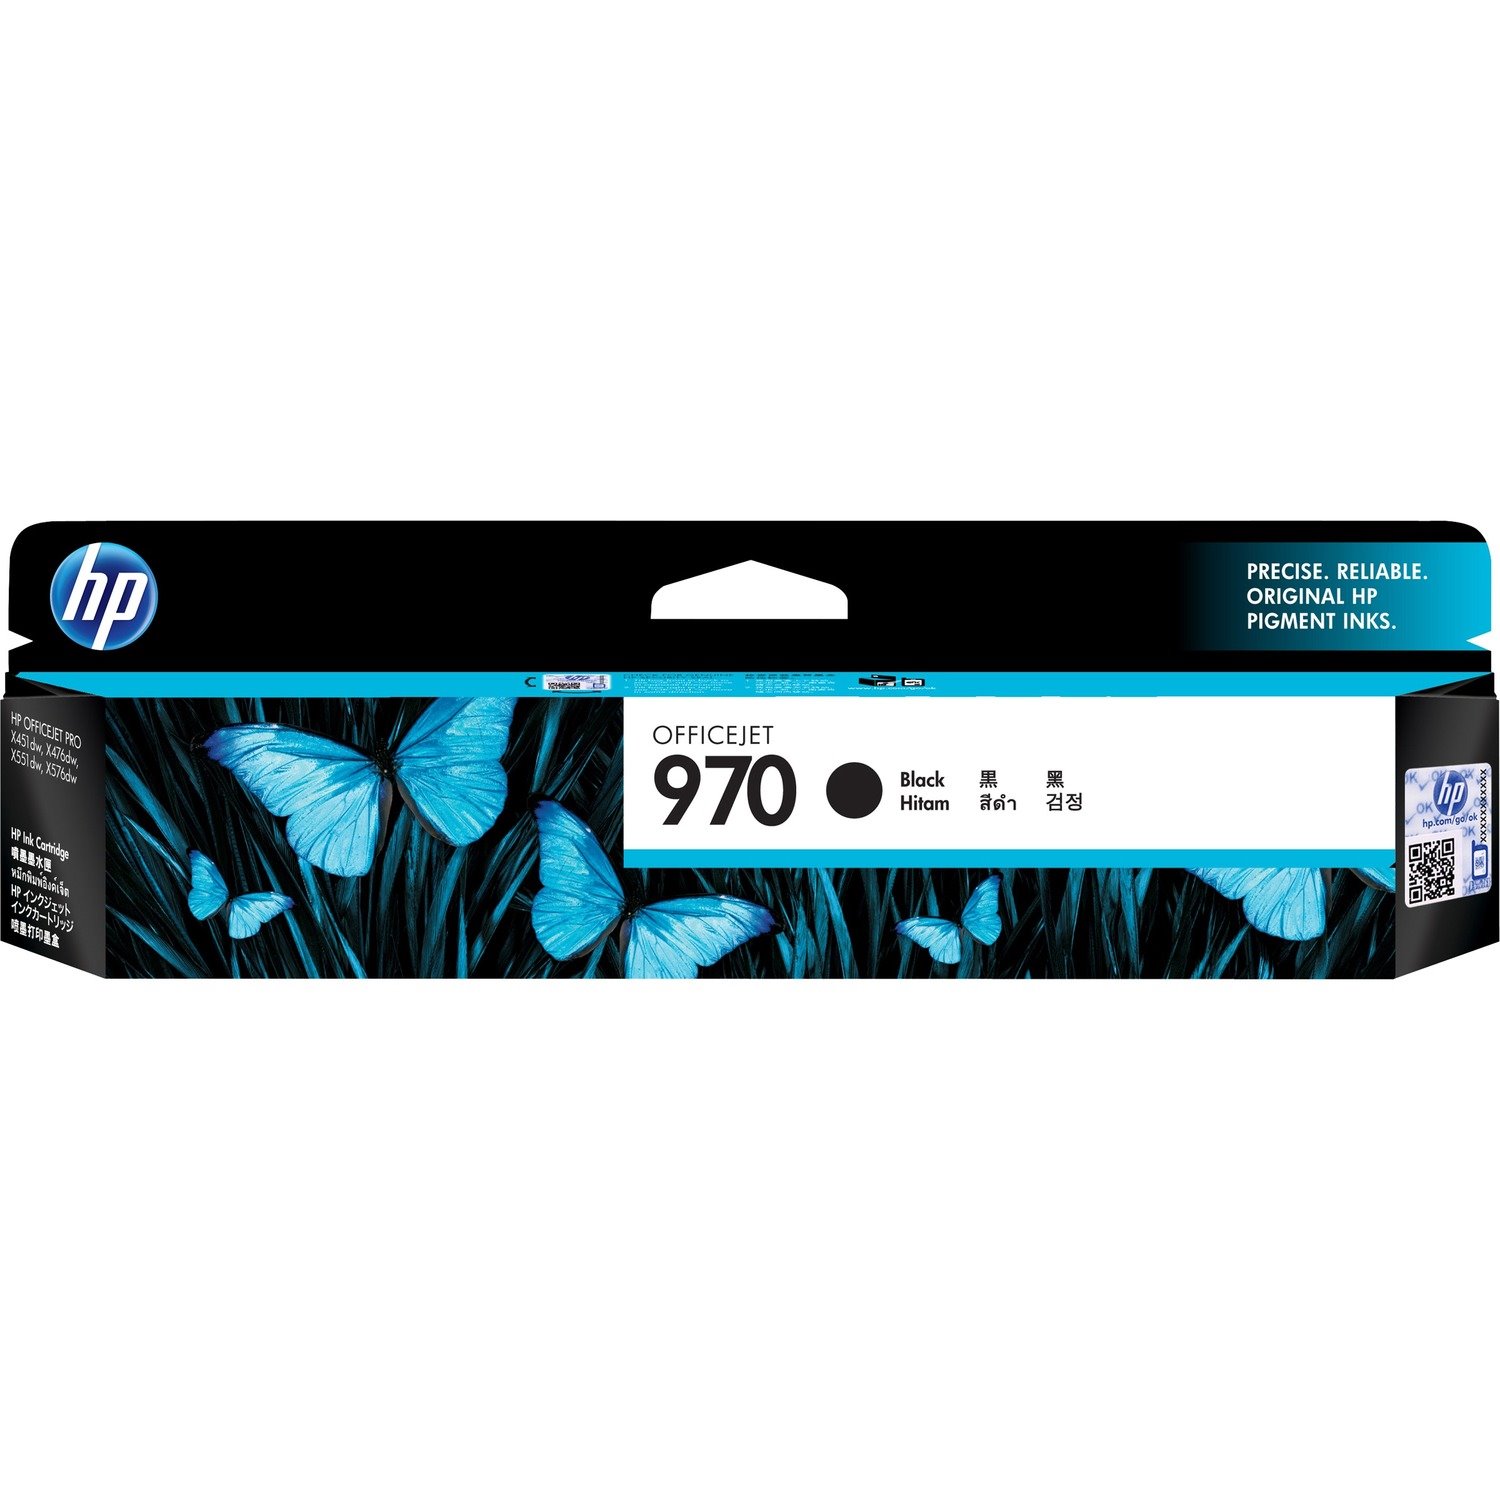 HP 970 Original Inkjet Ink Cartridge - Black Pack